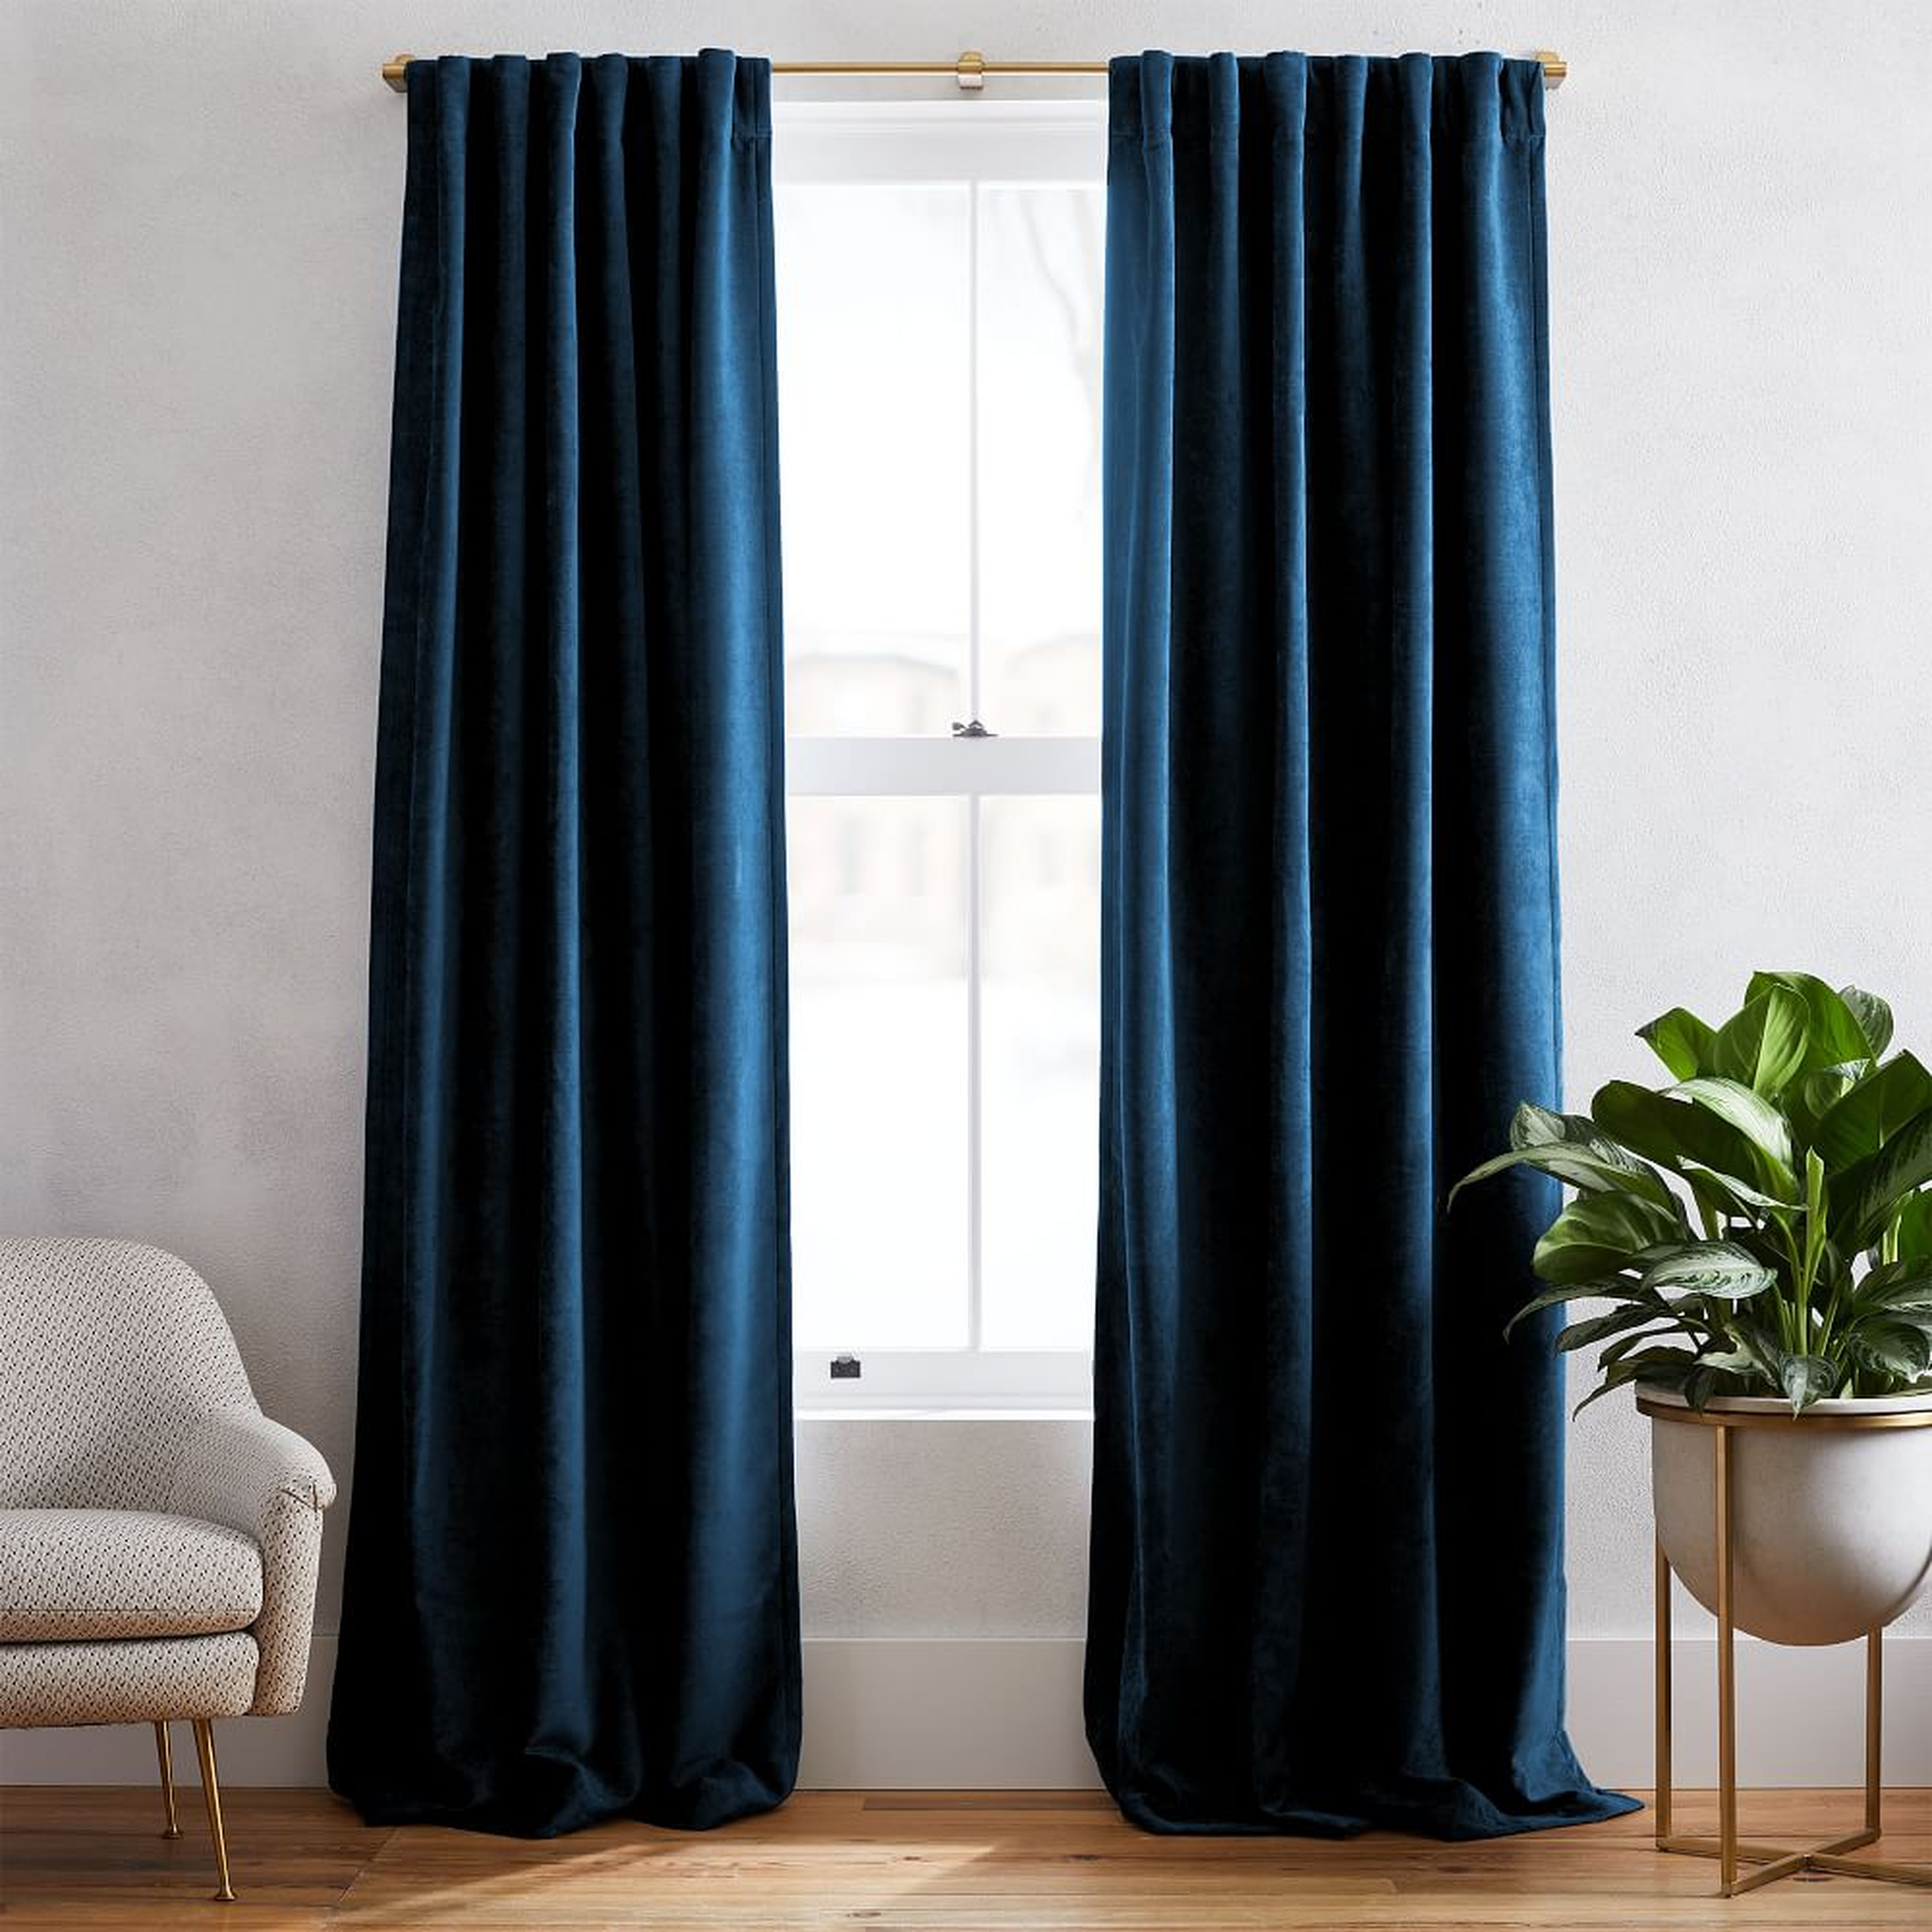 Worn Velvet Curtain with Blackout Lining, Regal Blue, 48"x108", Set of 2 - West Elm